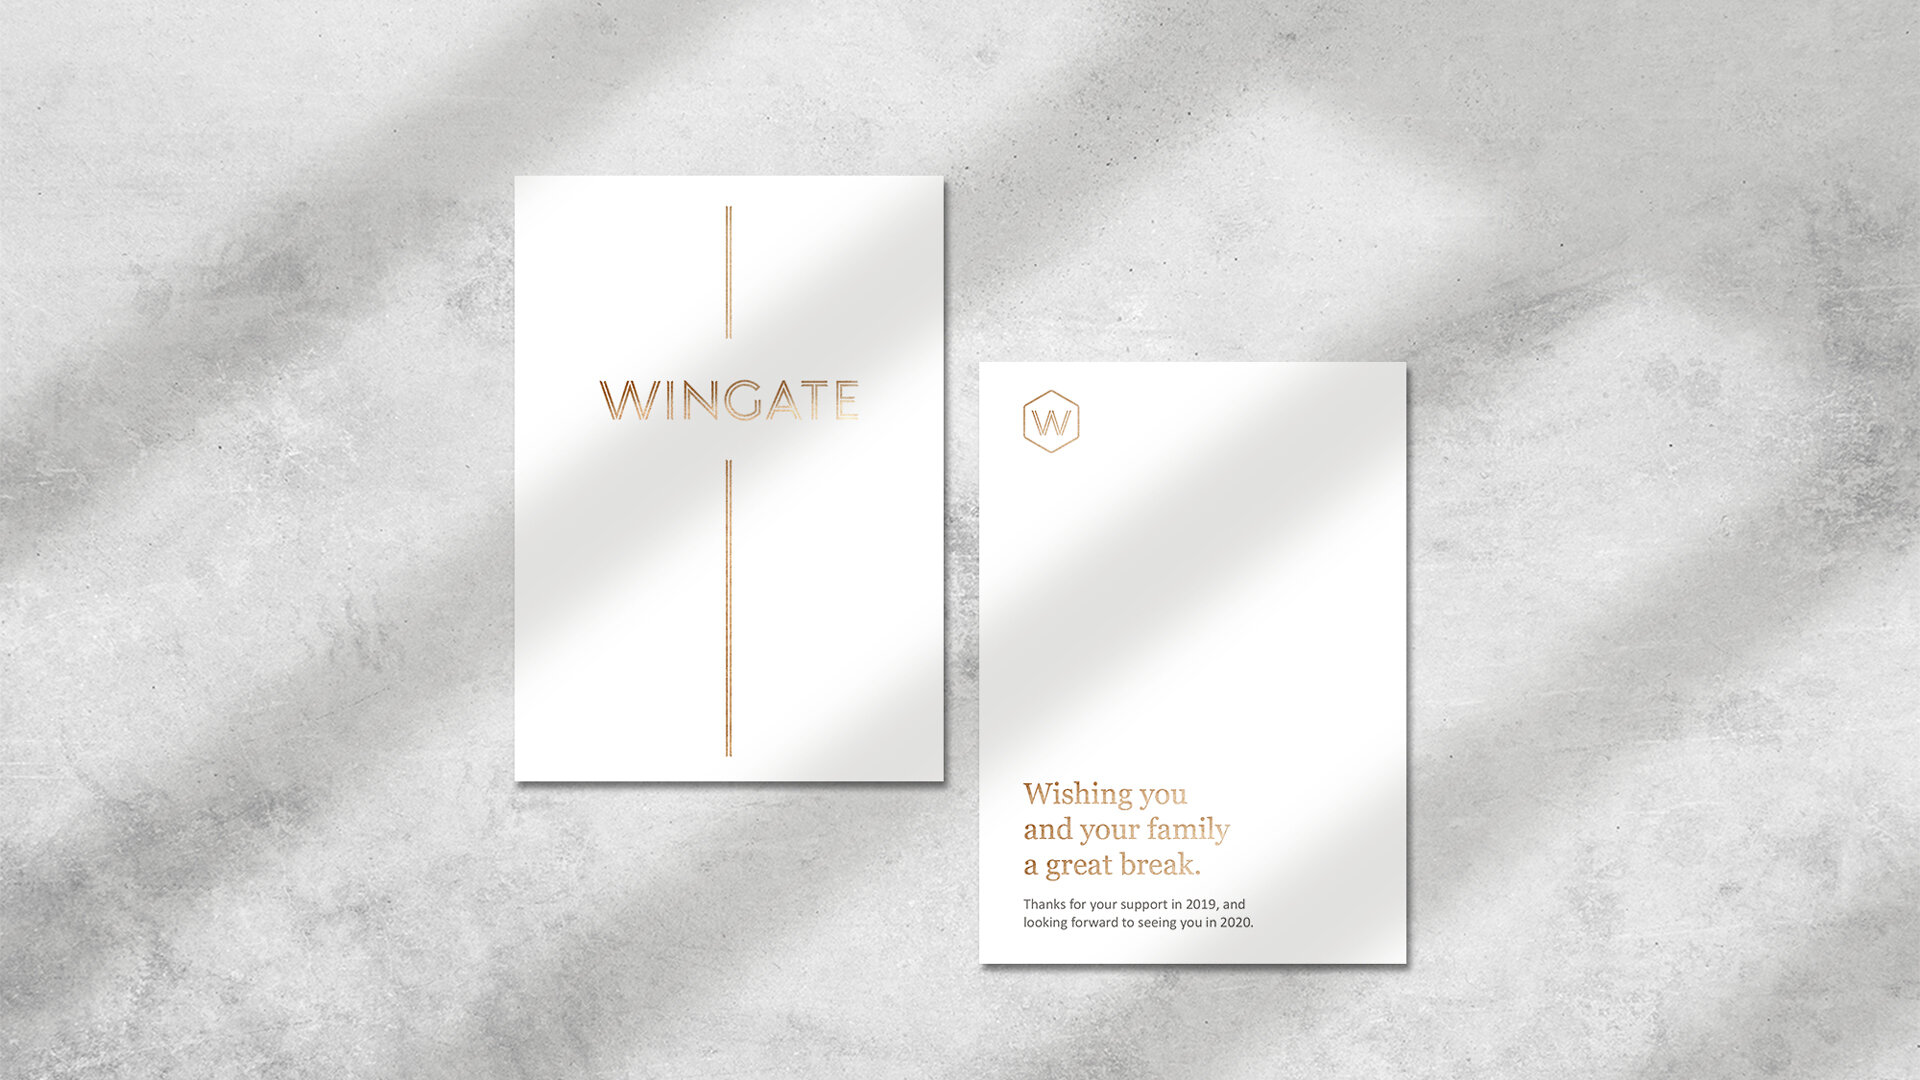 Wingate thank you card.jpg